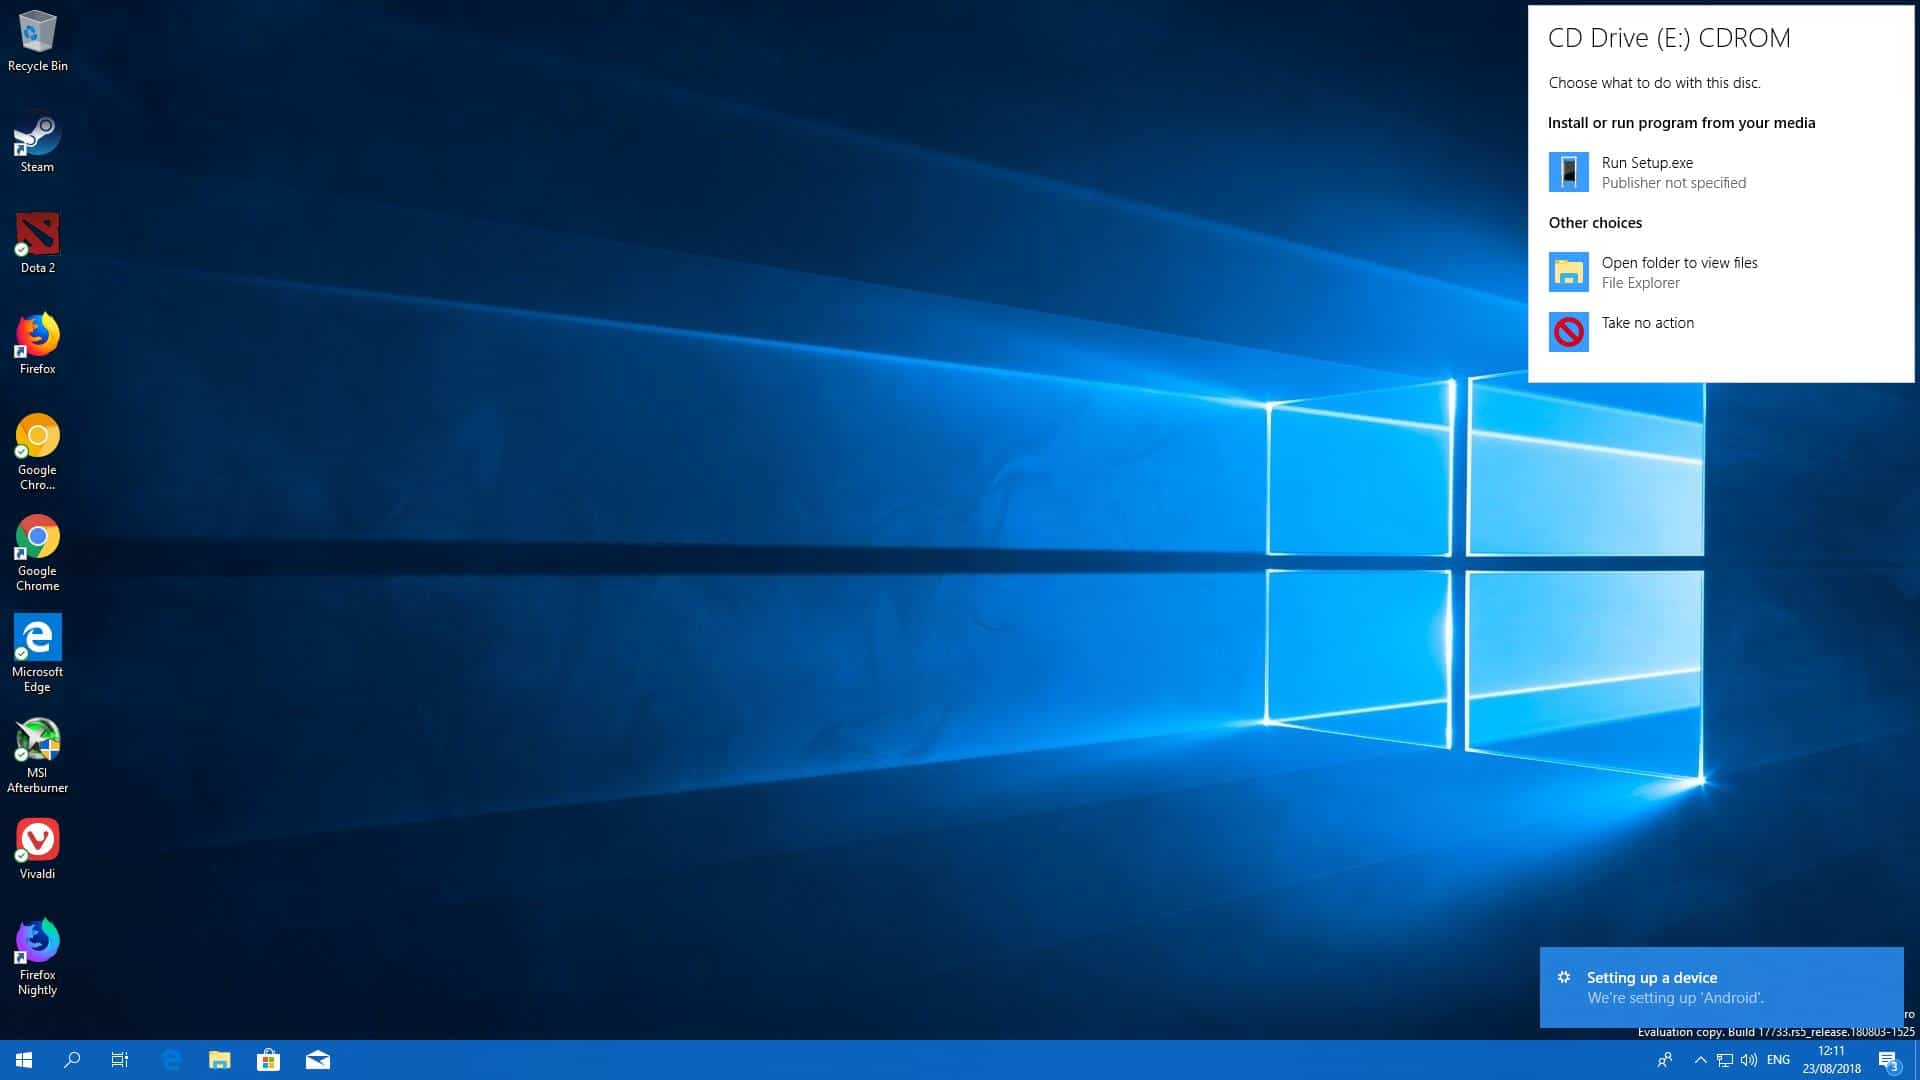 How to configure autoplay on Windows 10 - gHacks Tech News